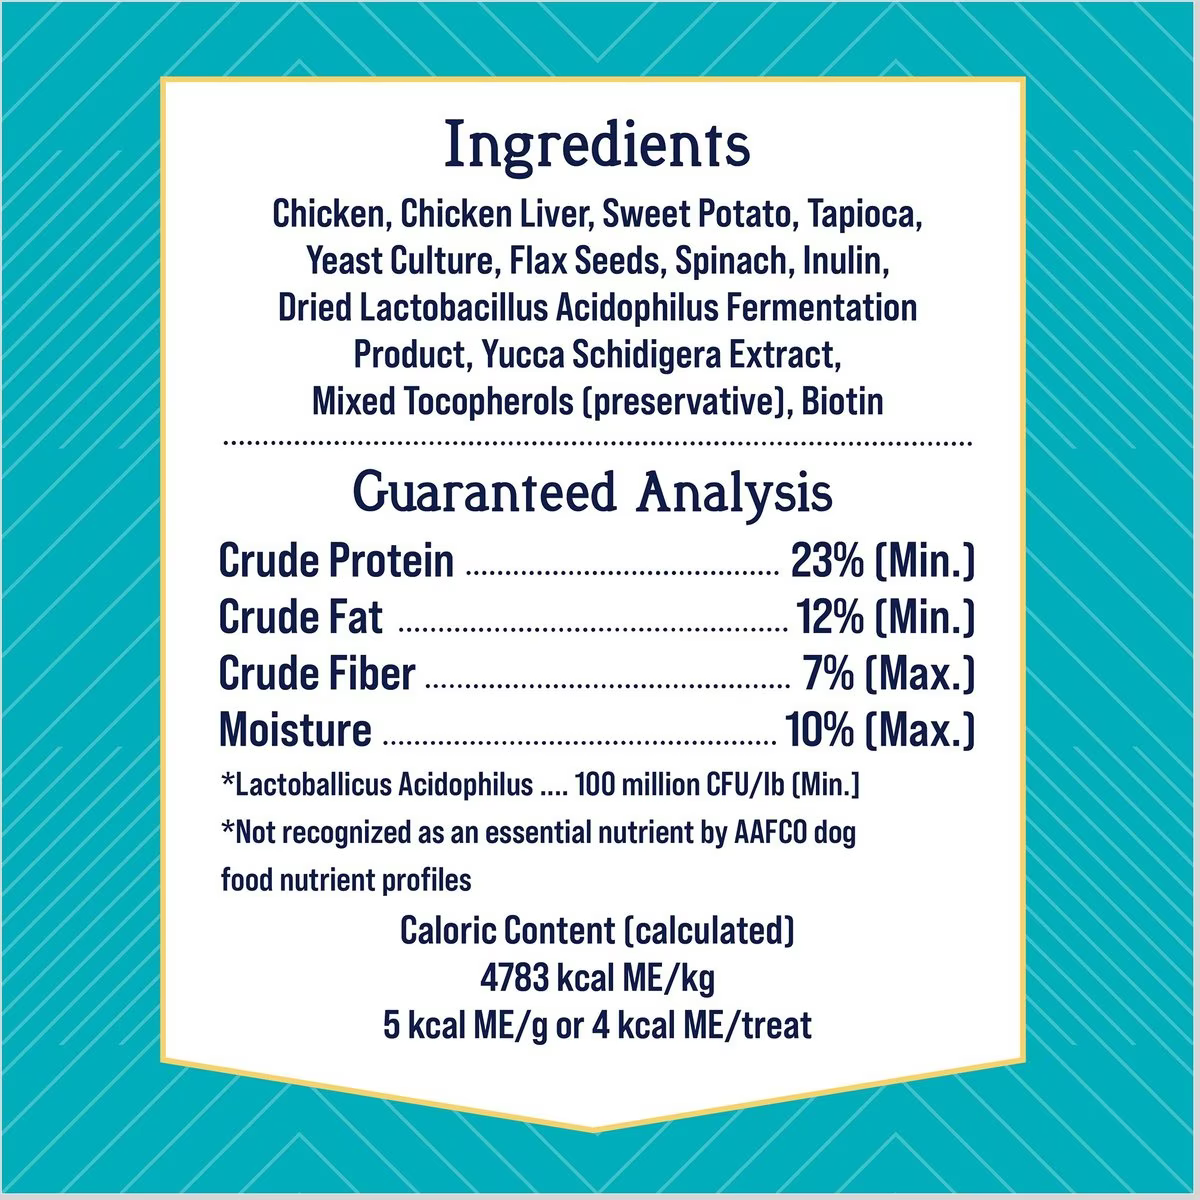 Stewart Healthy Gut Chicken & Vegetables Recipe Grain-Free Freeze-Dried Dog Treats - Talis Us